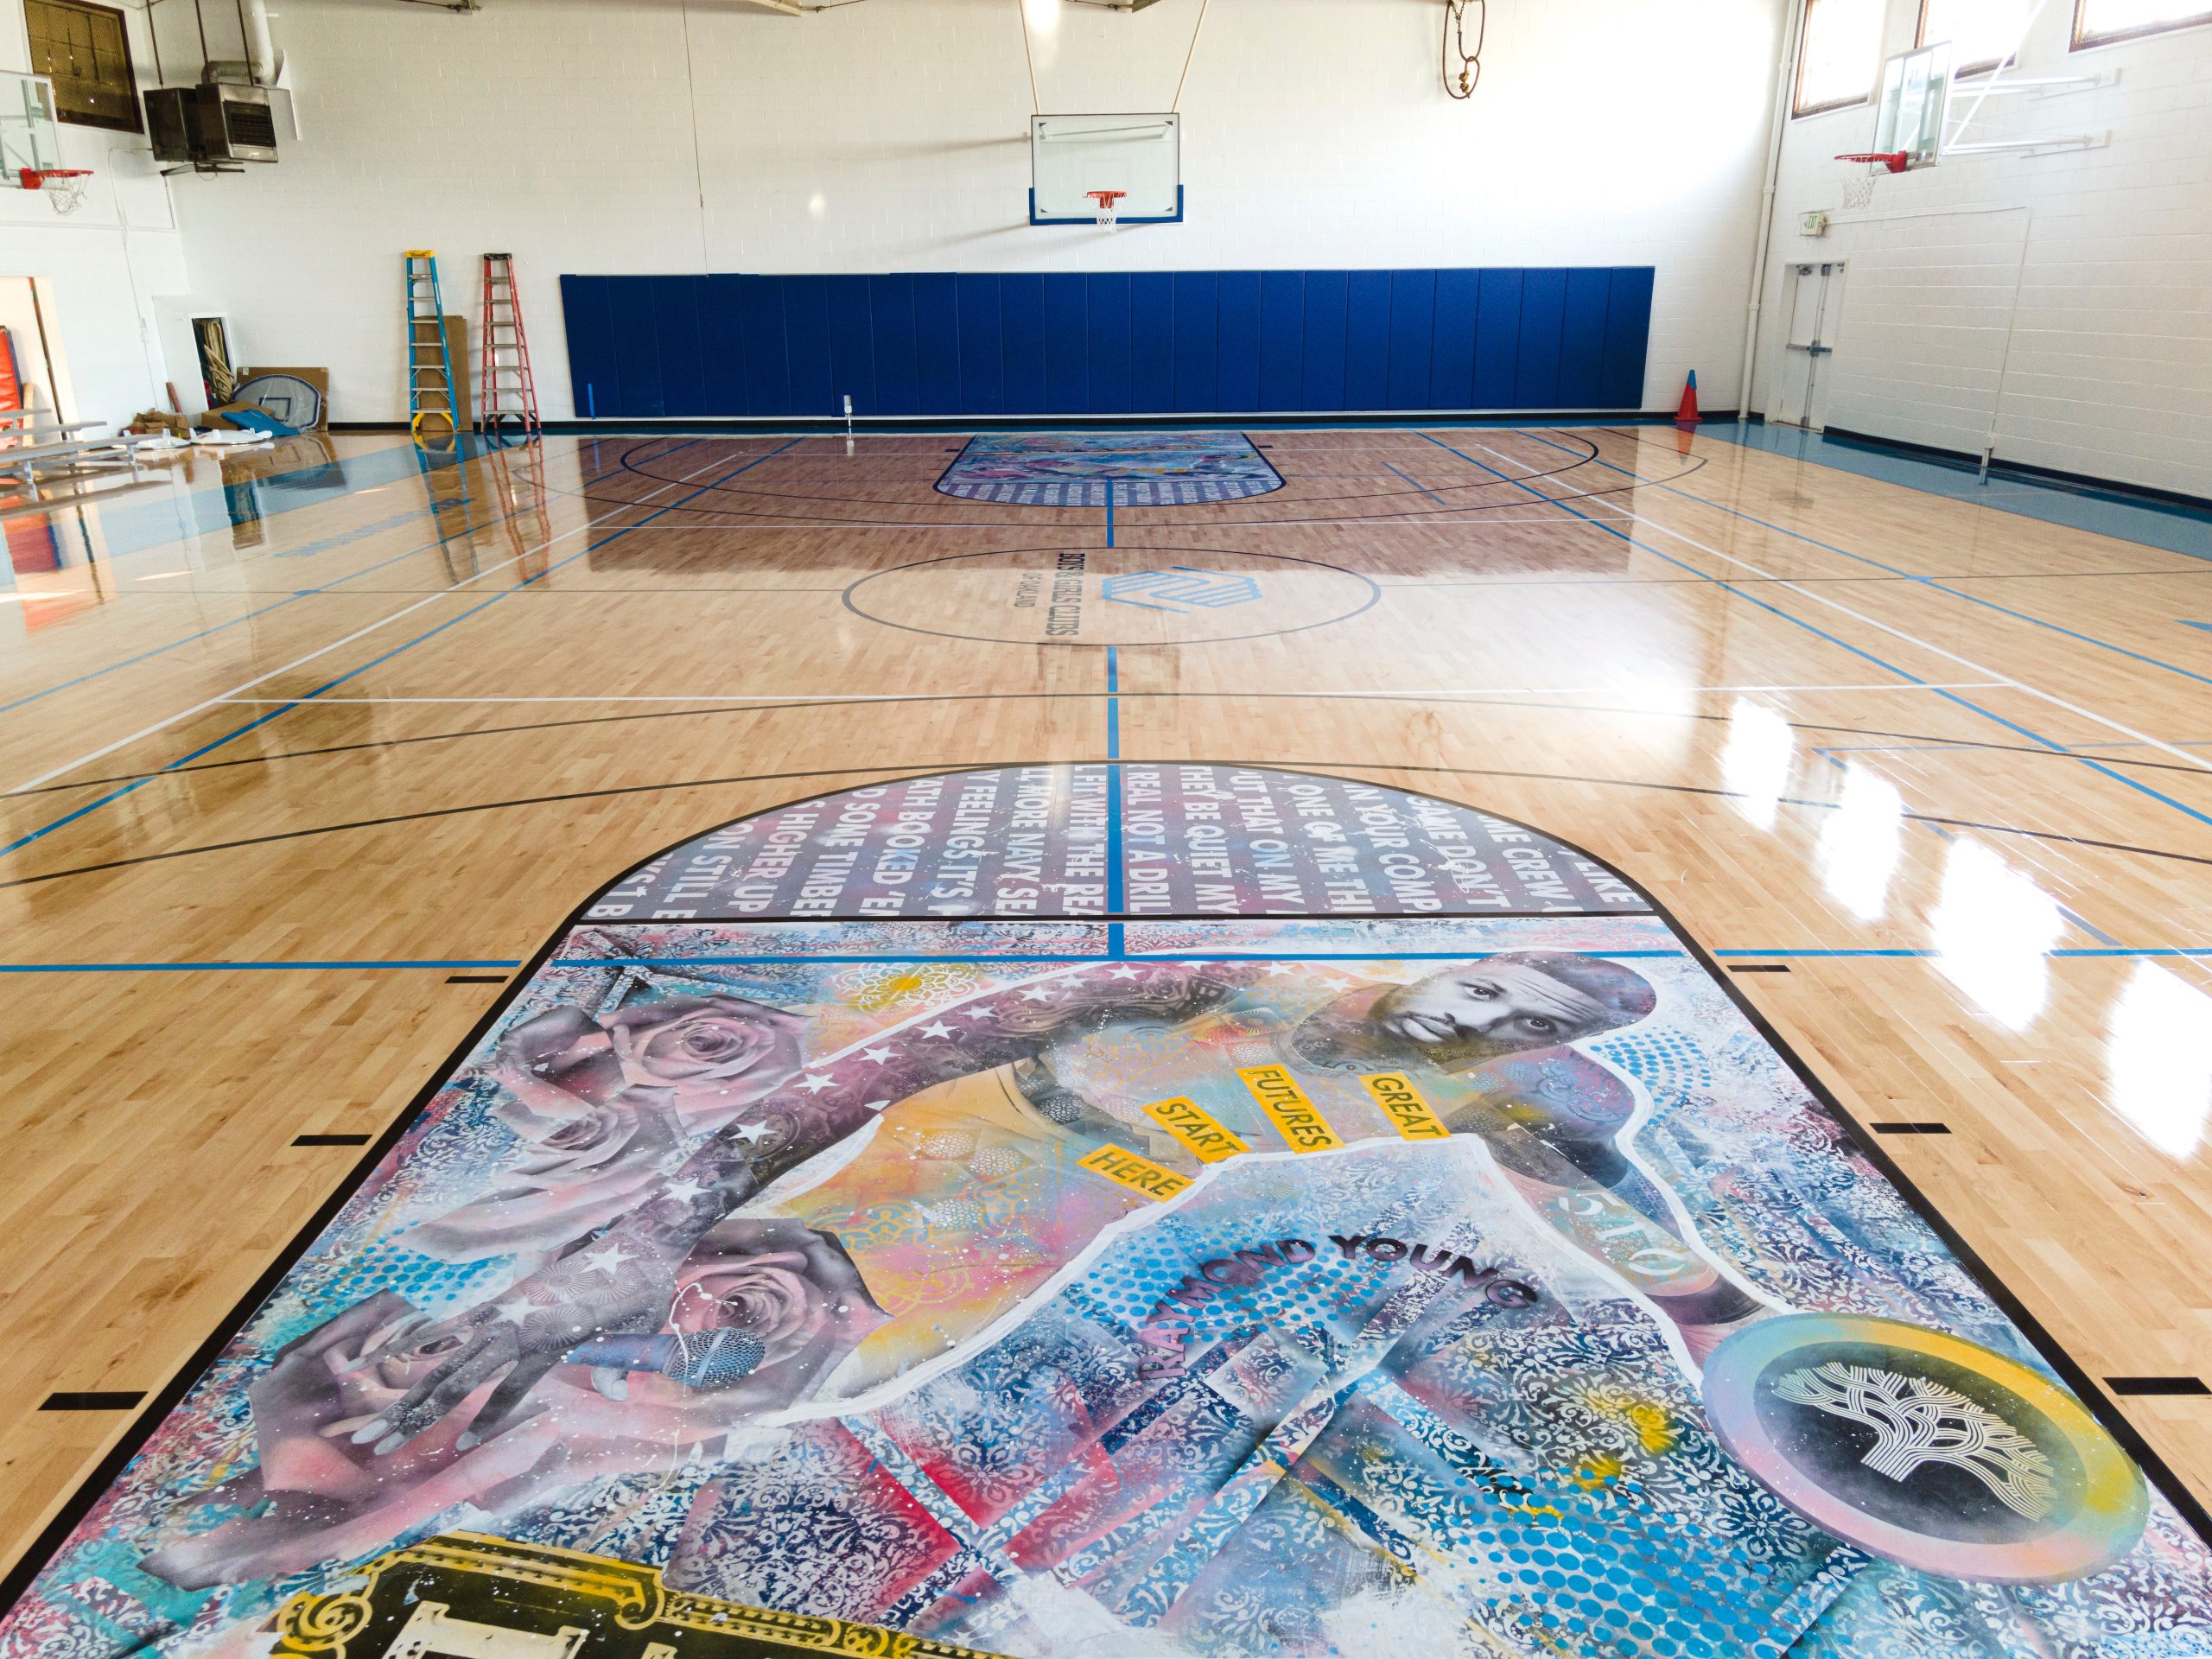 2K Foundations and Damian Lillard basketball court mural – Boys and Girls Club, Oakland